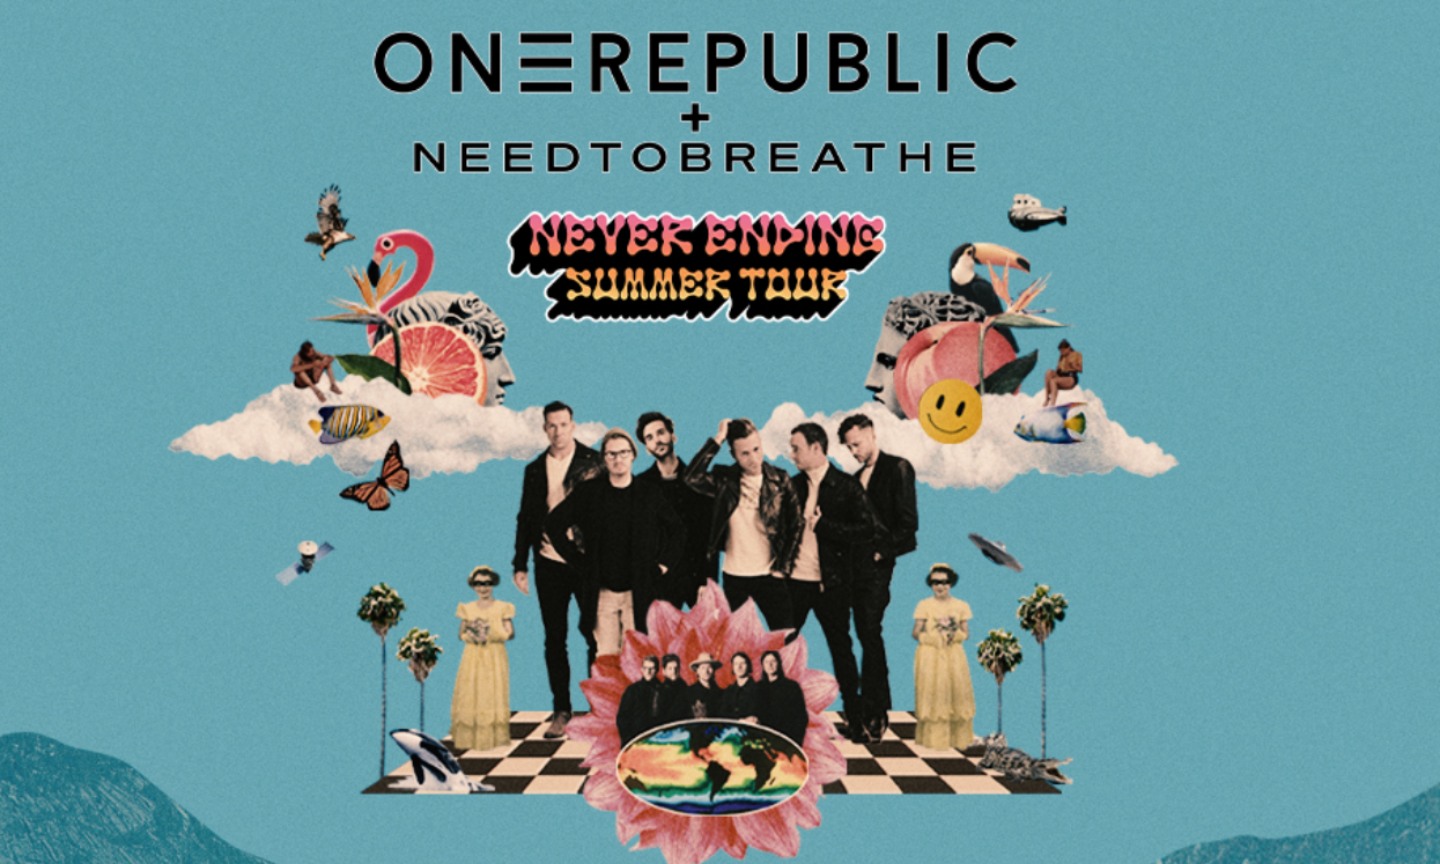 OneRepublic - West Coast (Official Music Video) 